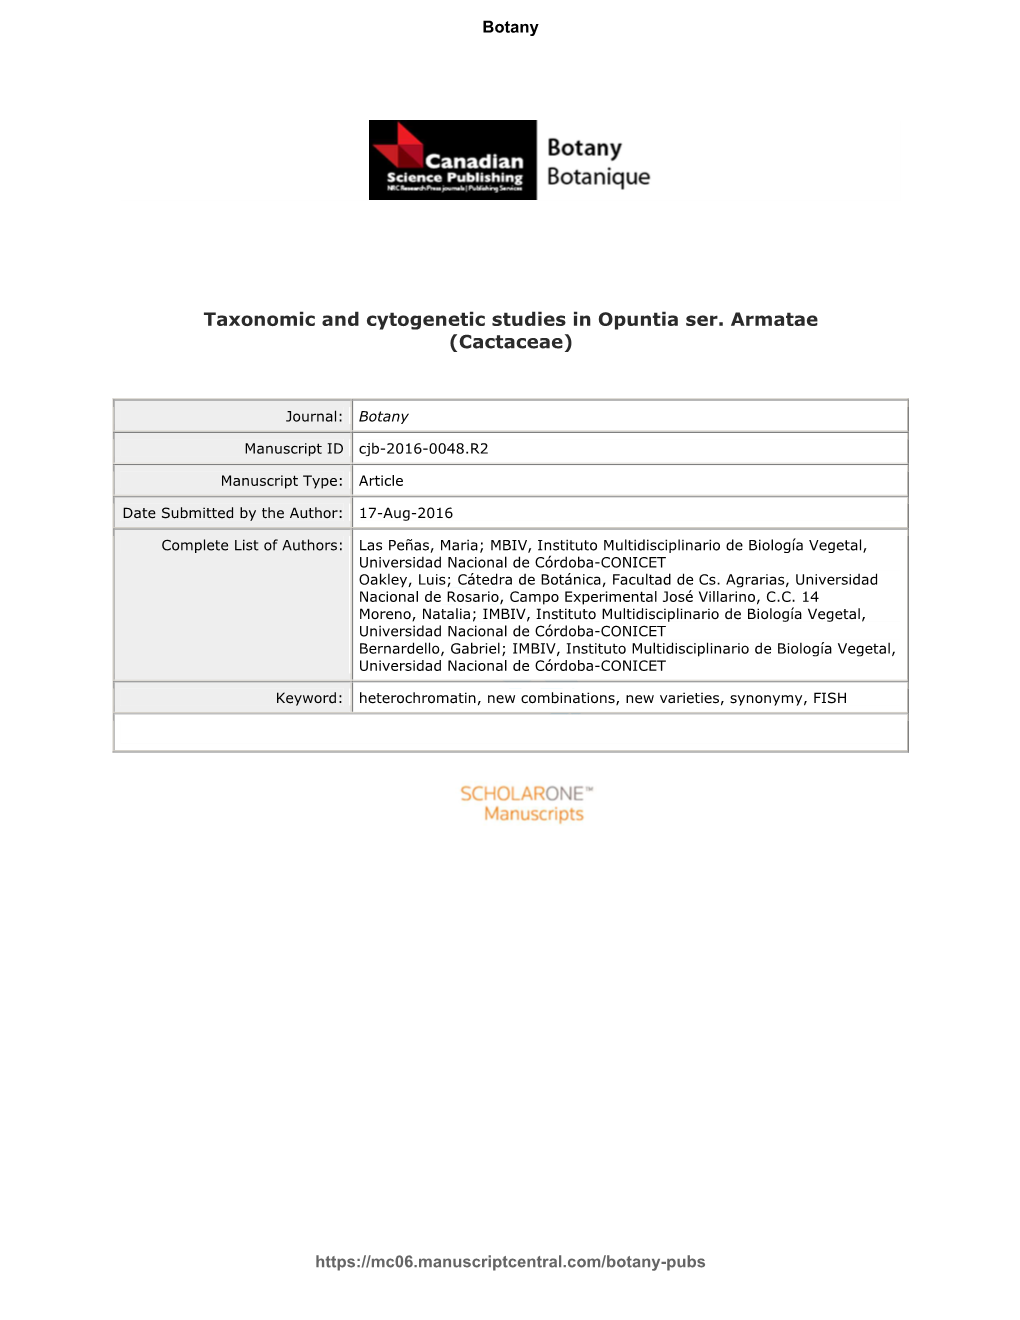 Taxonomic and Cytogenetic Studies in Opuntia Ser. Armatae (Cactaceae)